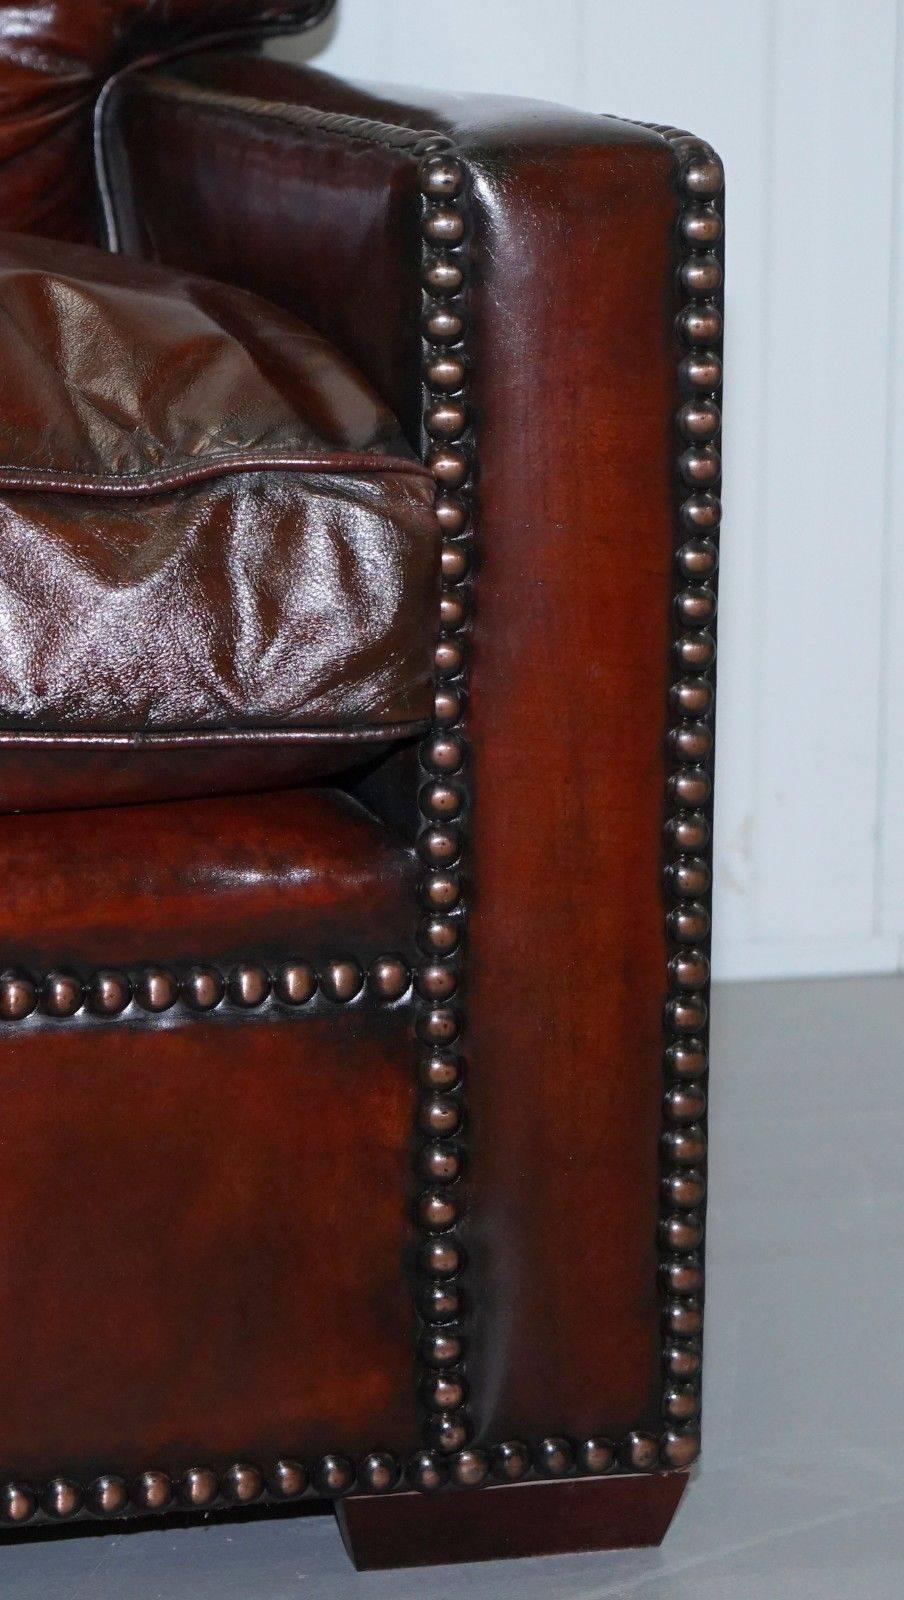 Restored Vintage Handmade in Chelsea Bordeaux Leather Sofa Part of Huge Suite 1